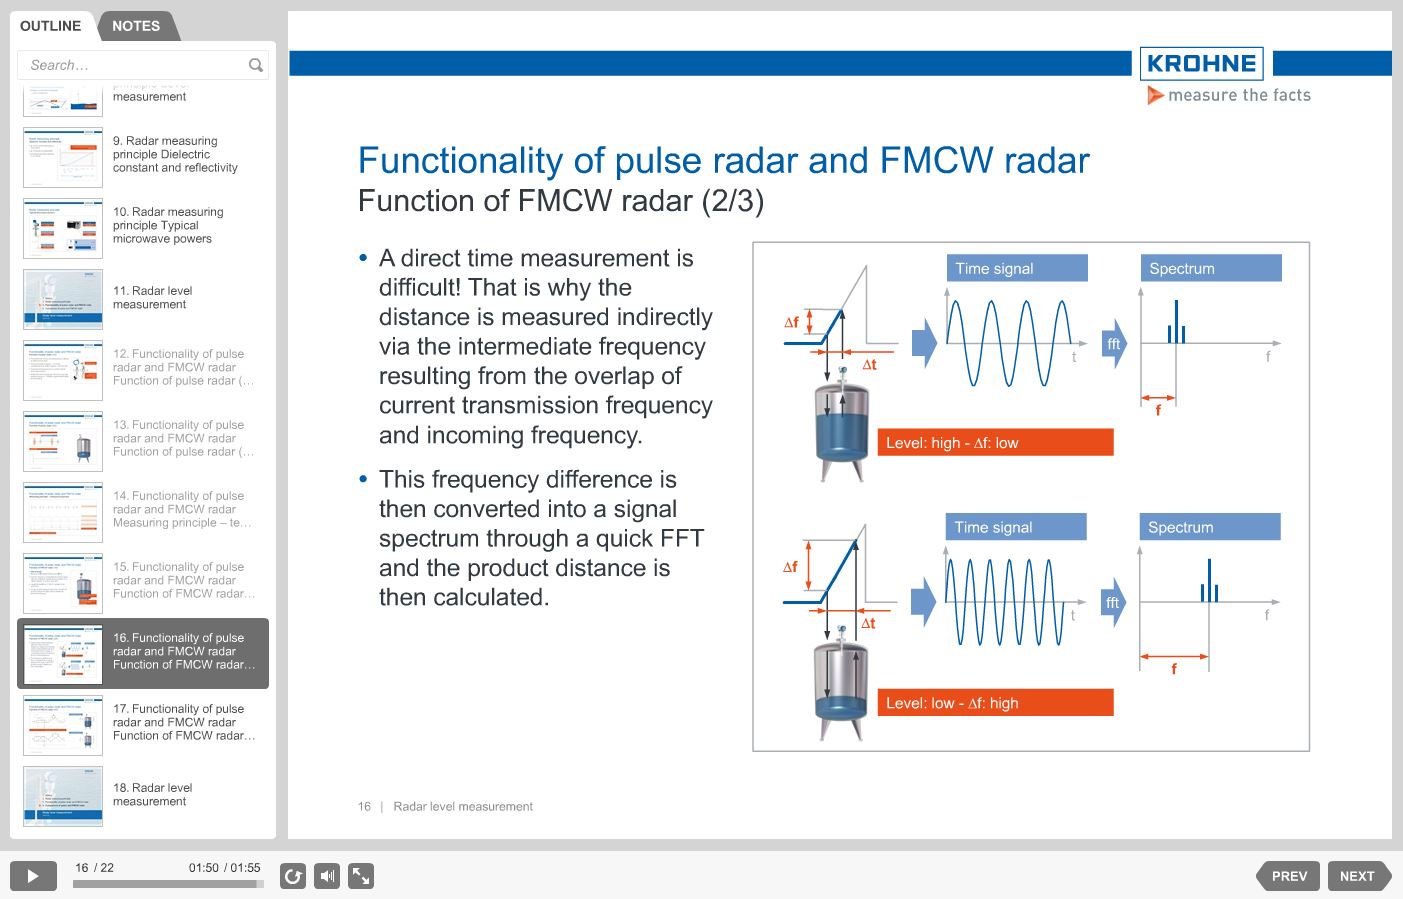 eLearning Radar Level Measurement – Function of FMCW radar